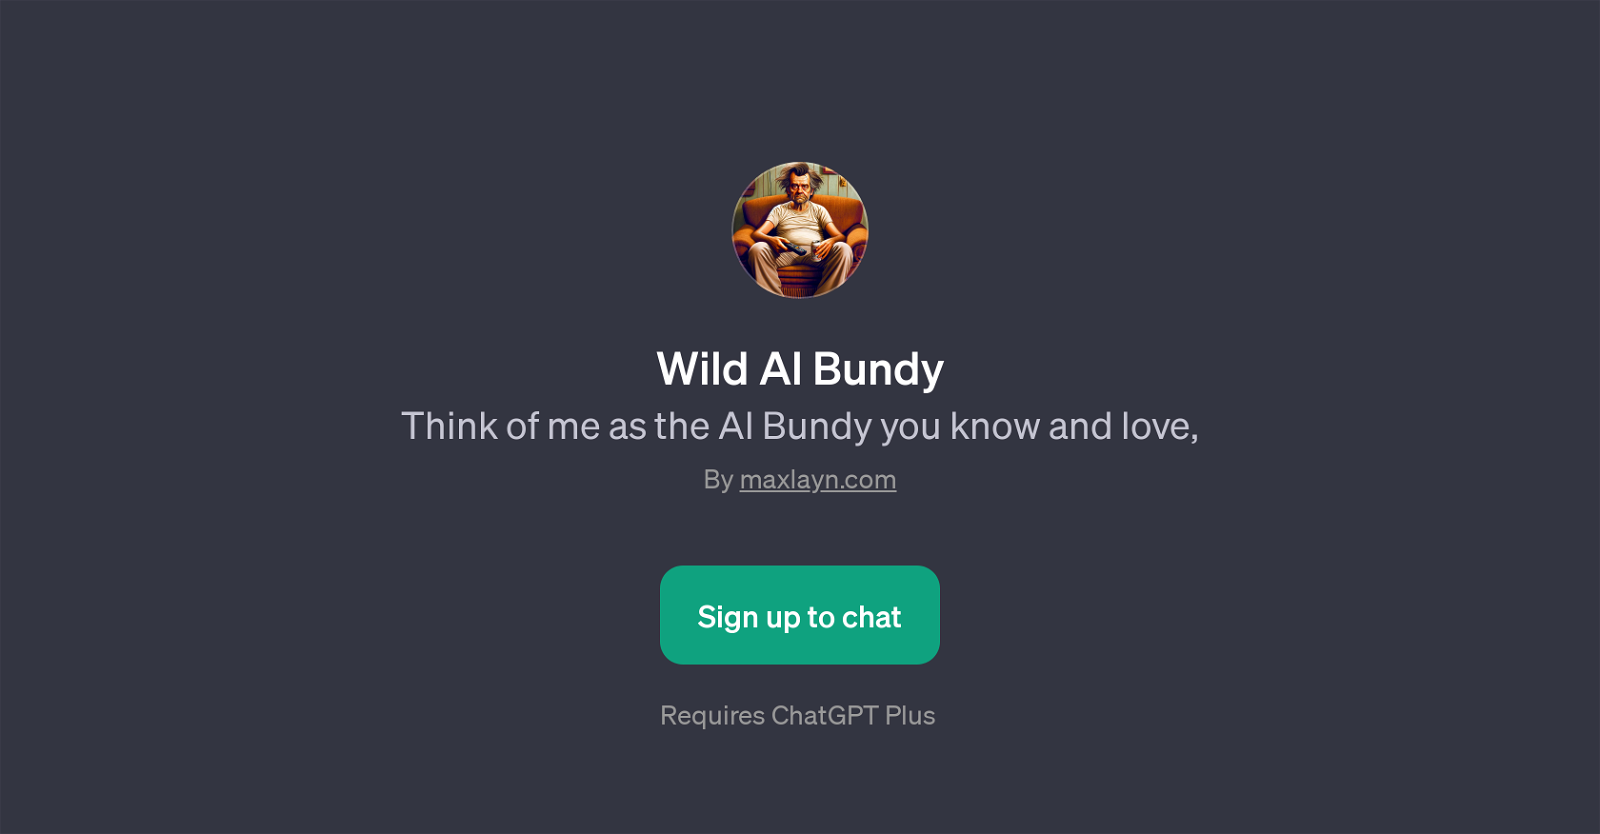 Wild Al Bundy website